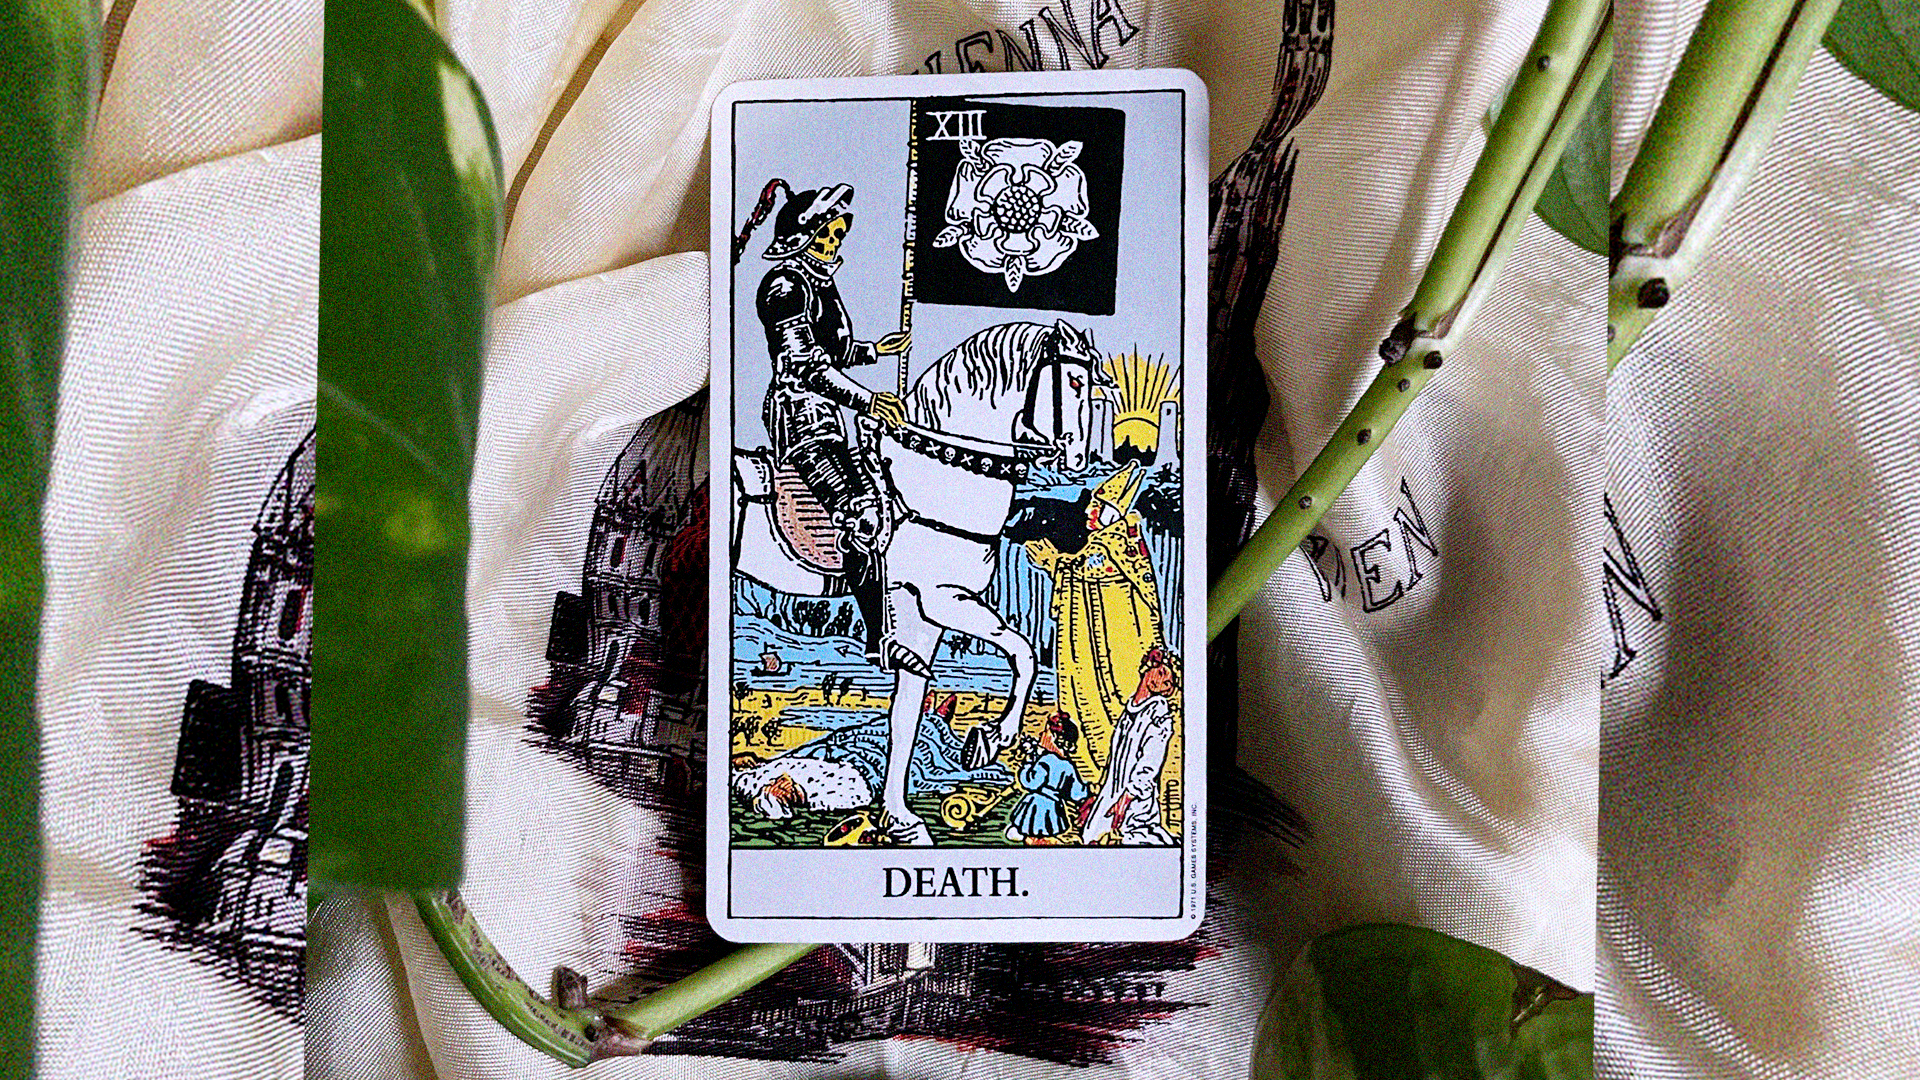 Death tarot card in the Rider Waite tarot deck